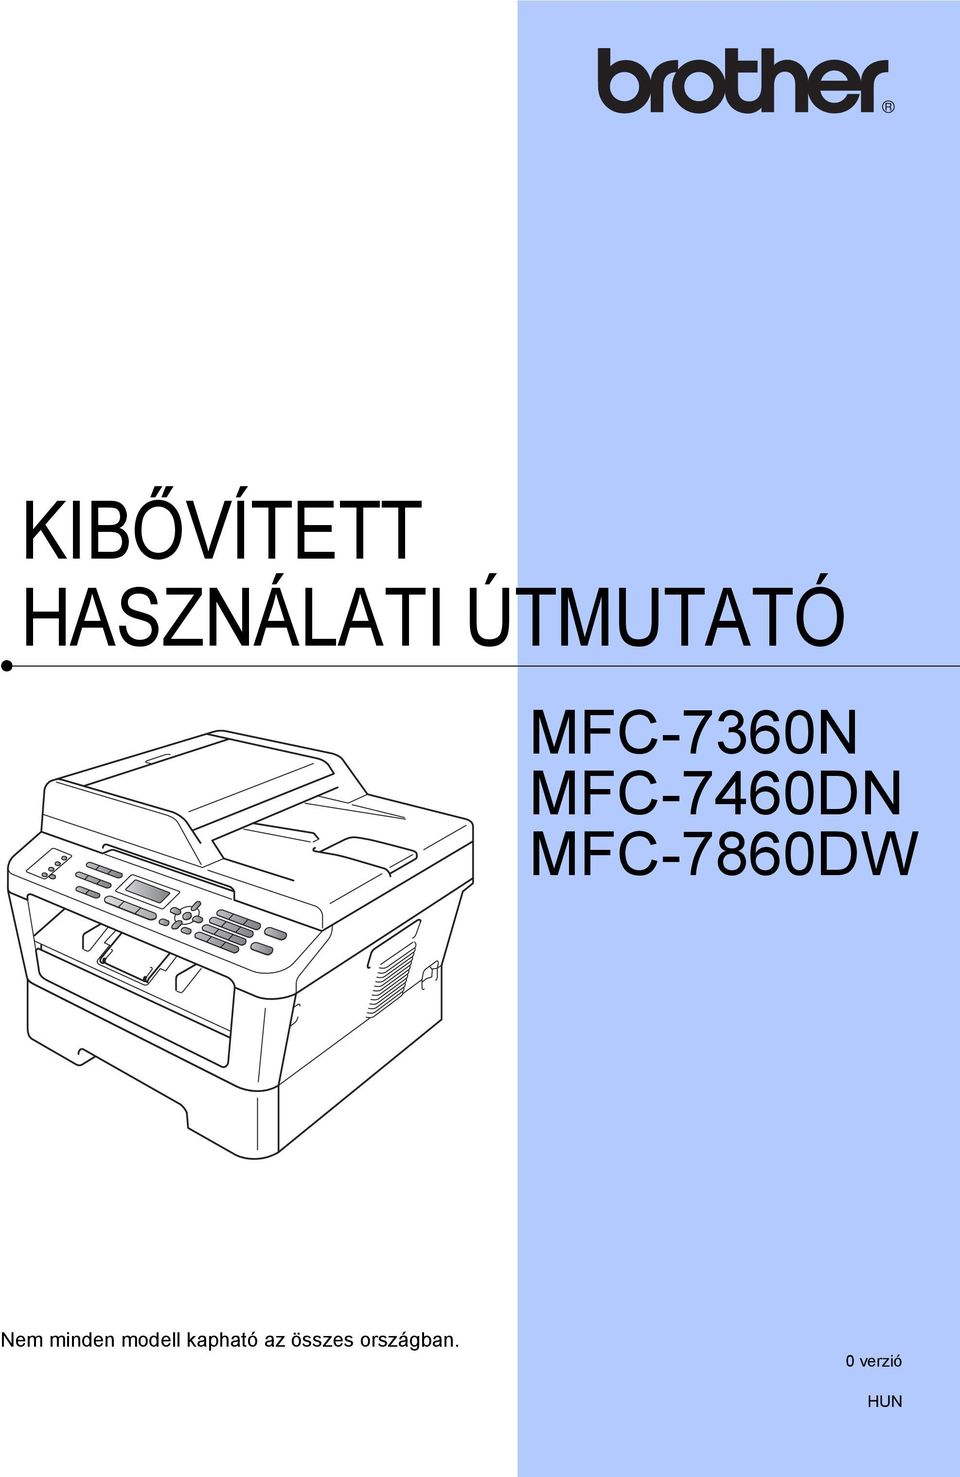 MFC-7860DW Nem minden modell